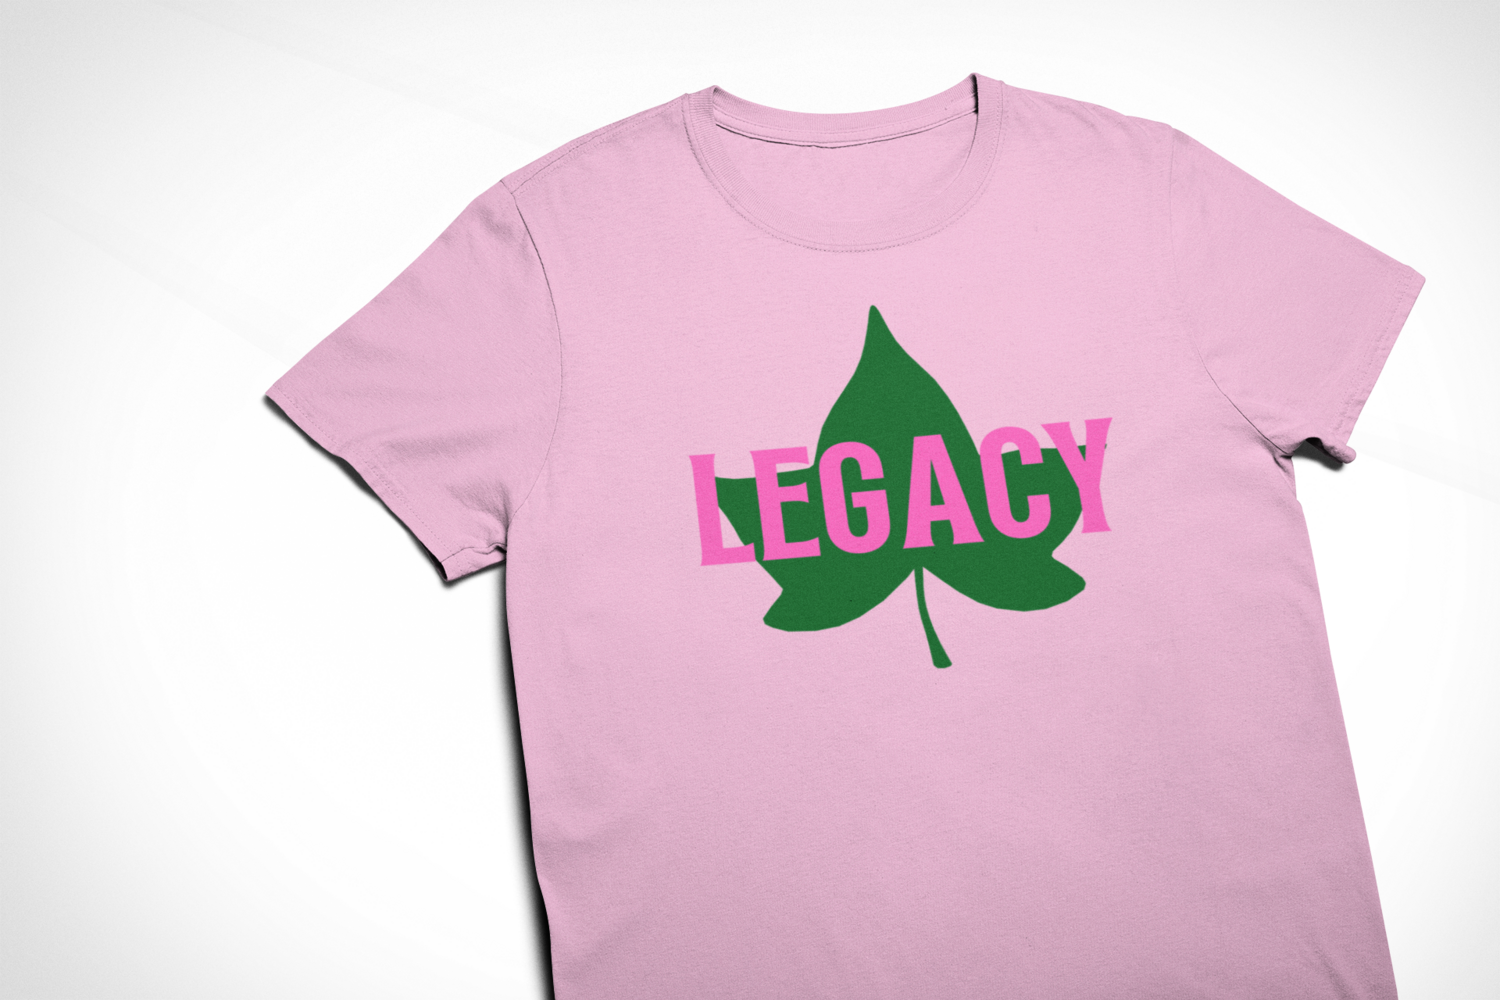 AKA Ivy Legacy T-Shirt by Afflatus